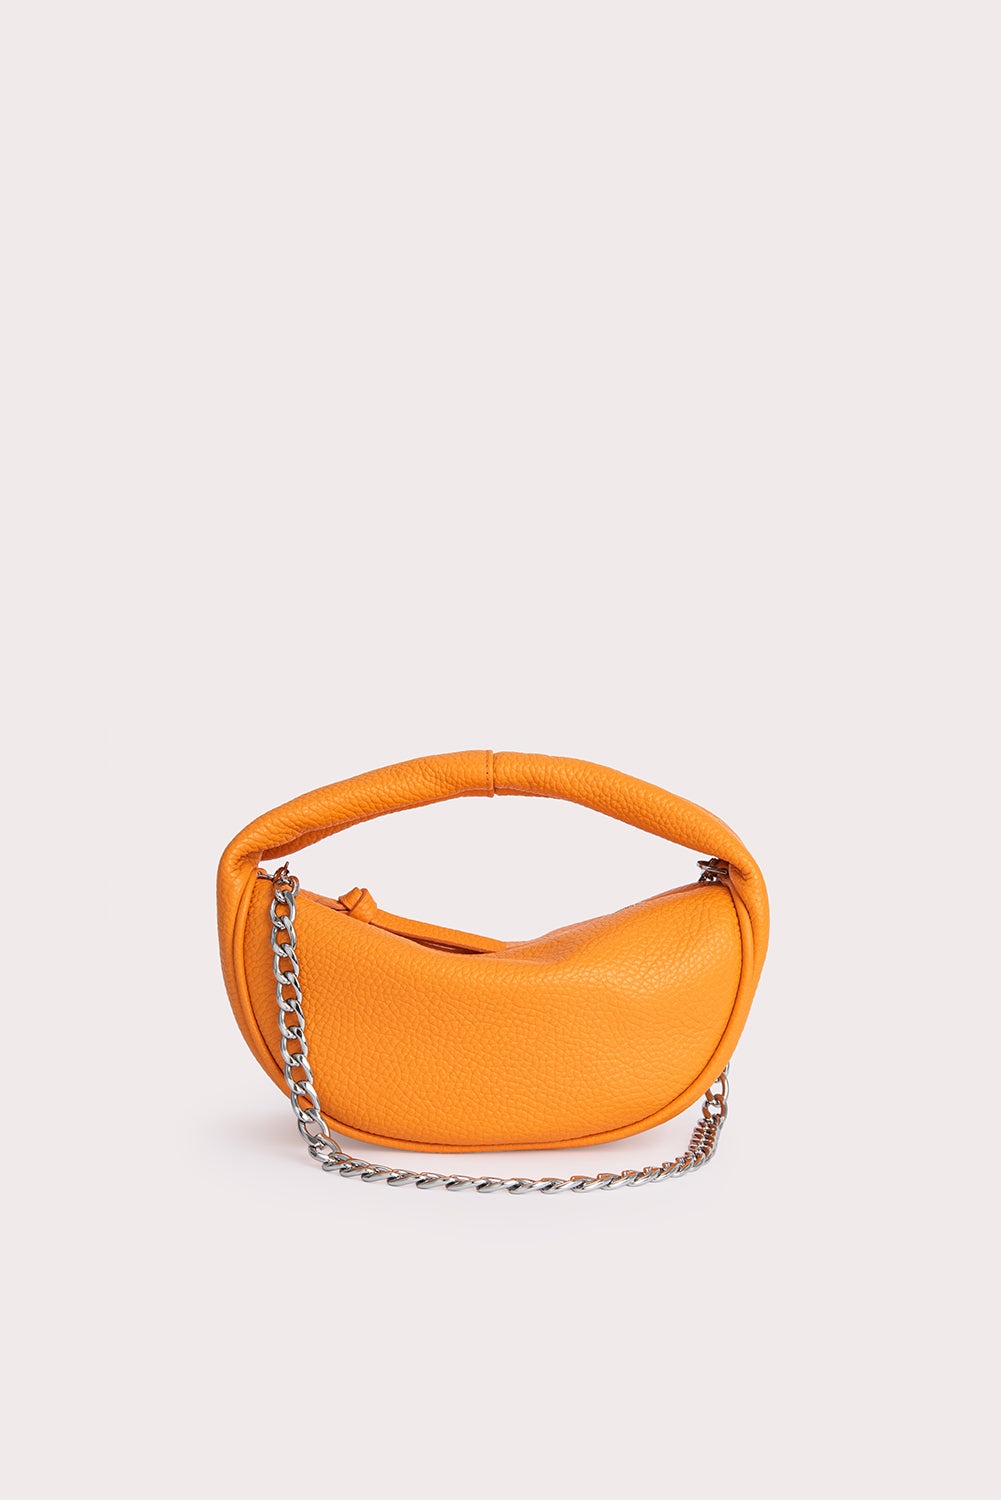 Baby Cush Orange Flat Grain Leather - 1